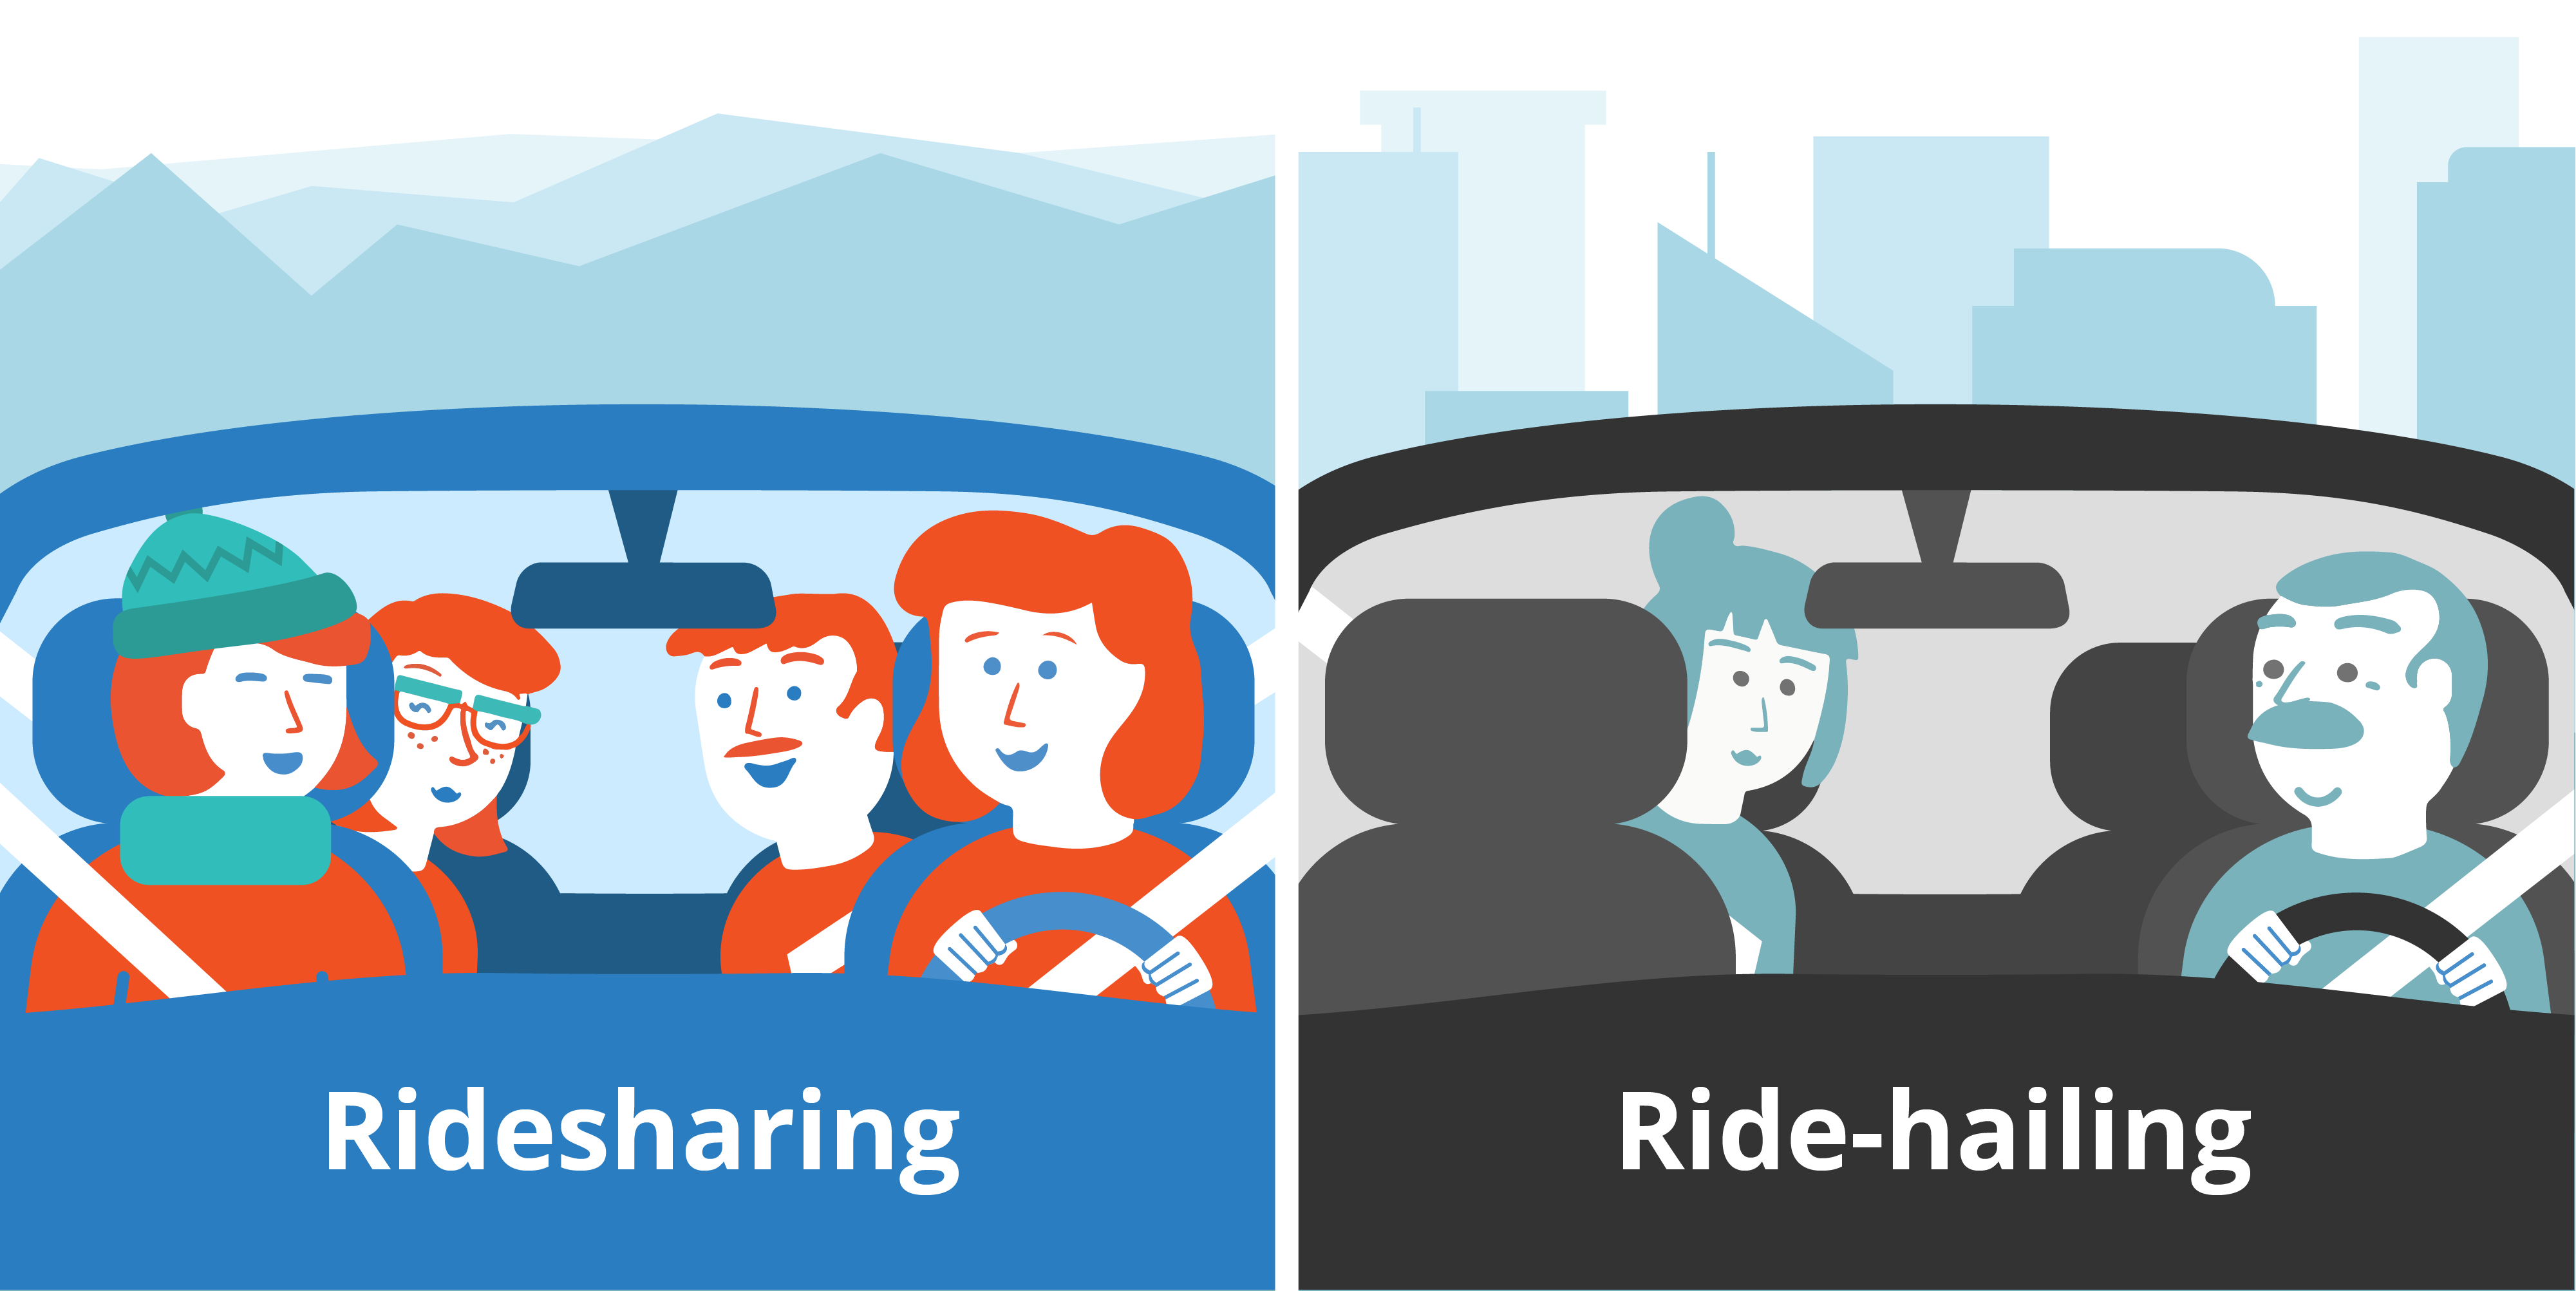 Uber and Lyft are not ridesharing